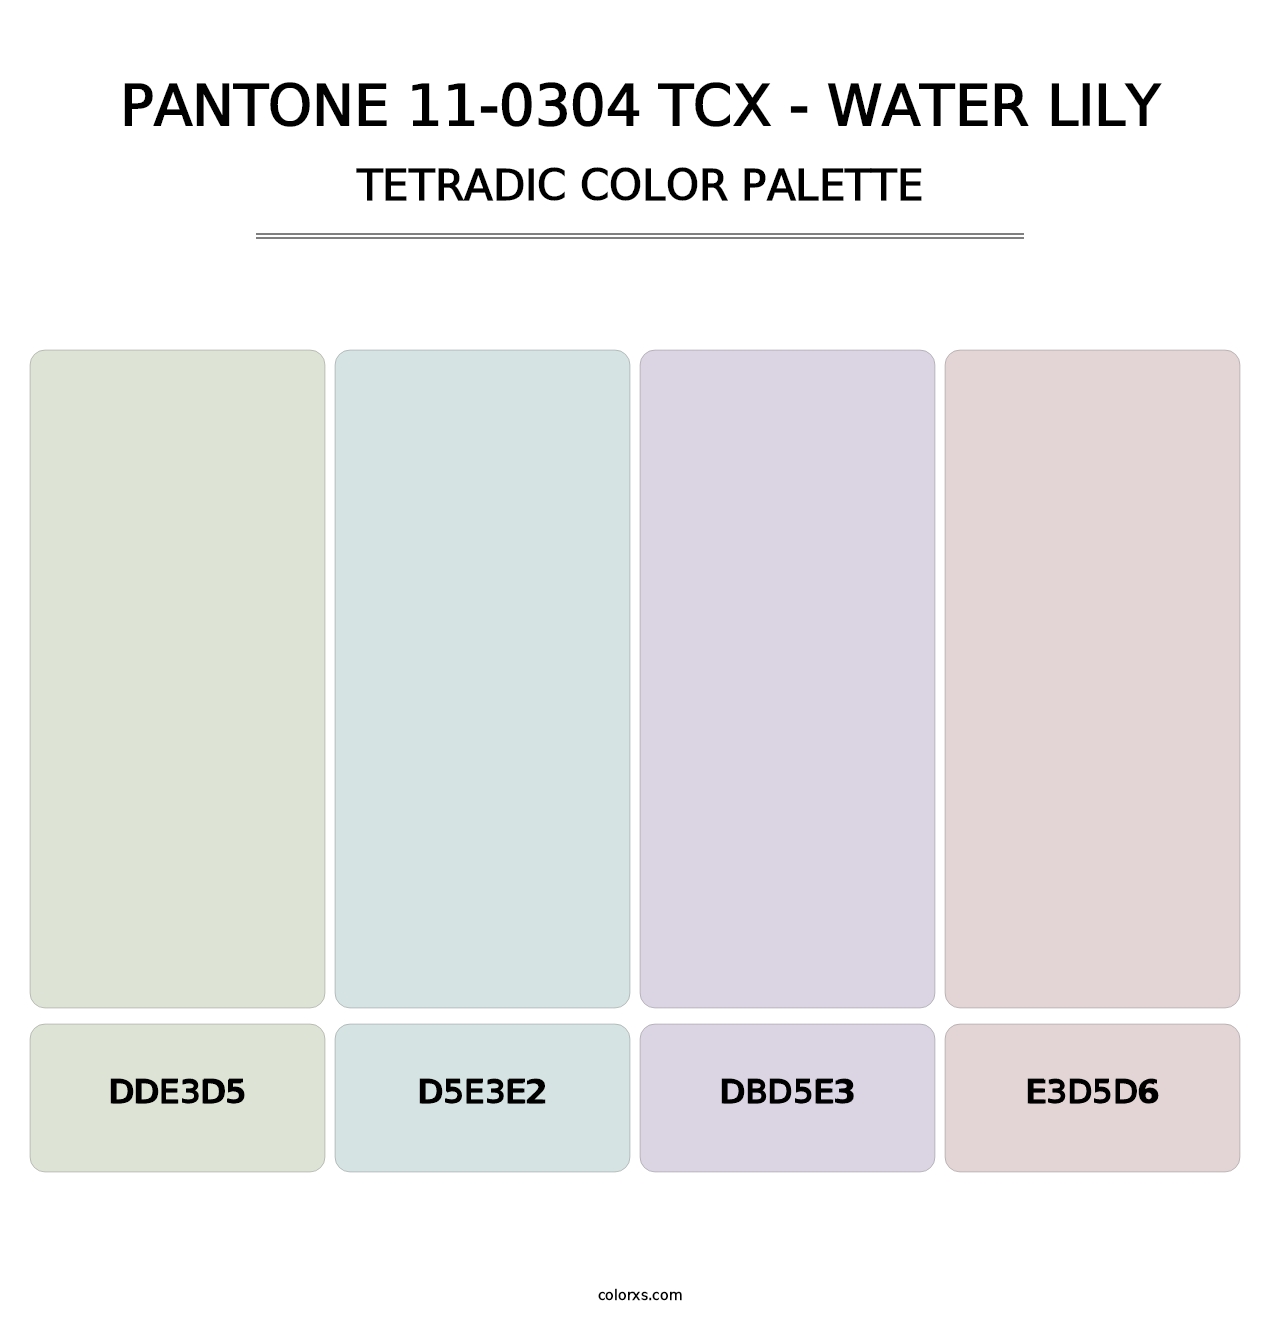 PANTONE 11-0304 TCX - Water Lily - Tetradic Color Palette